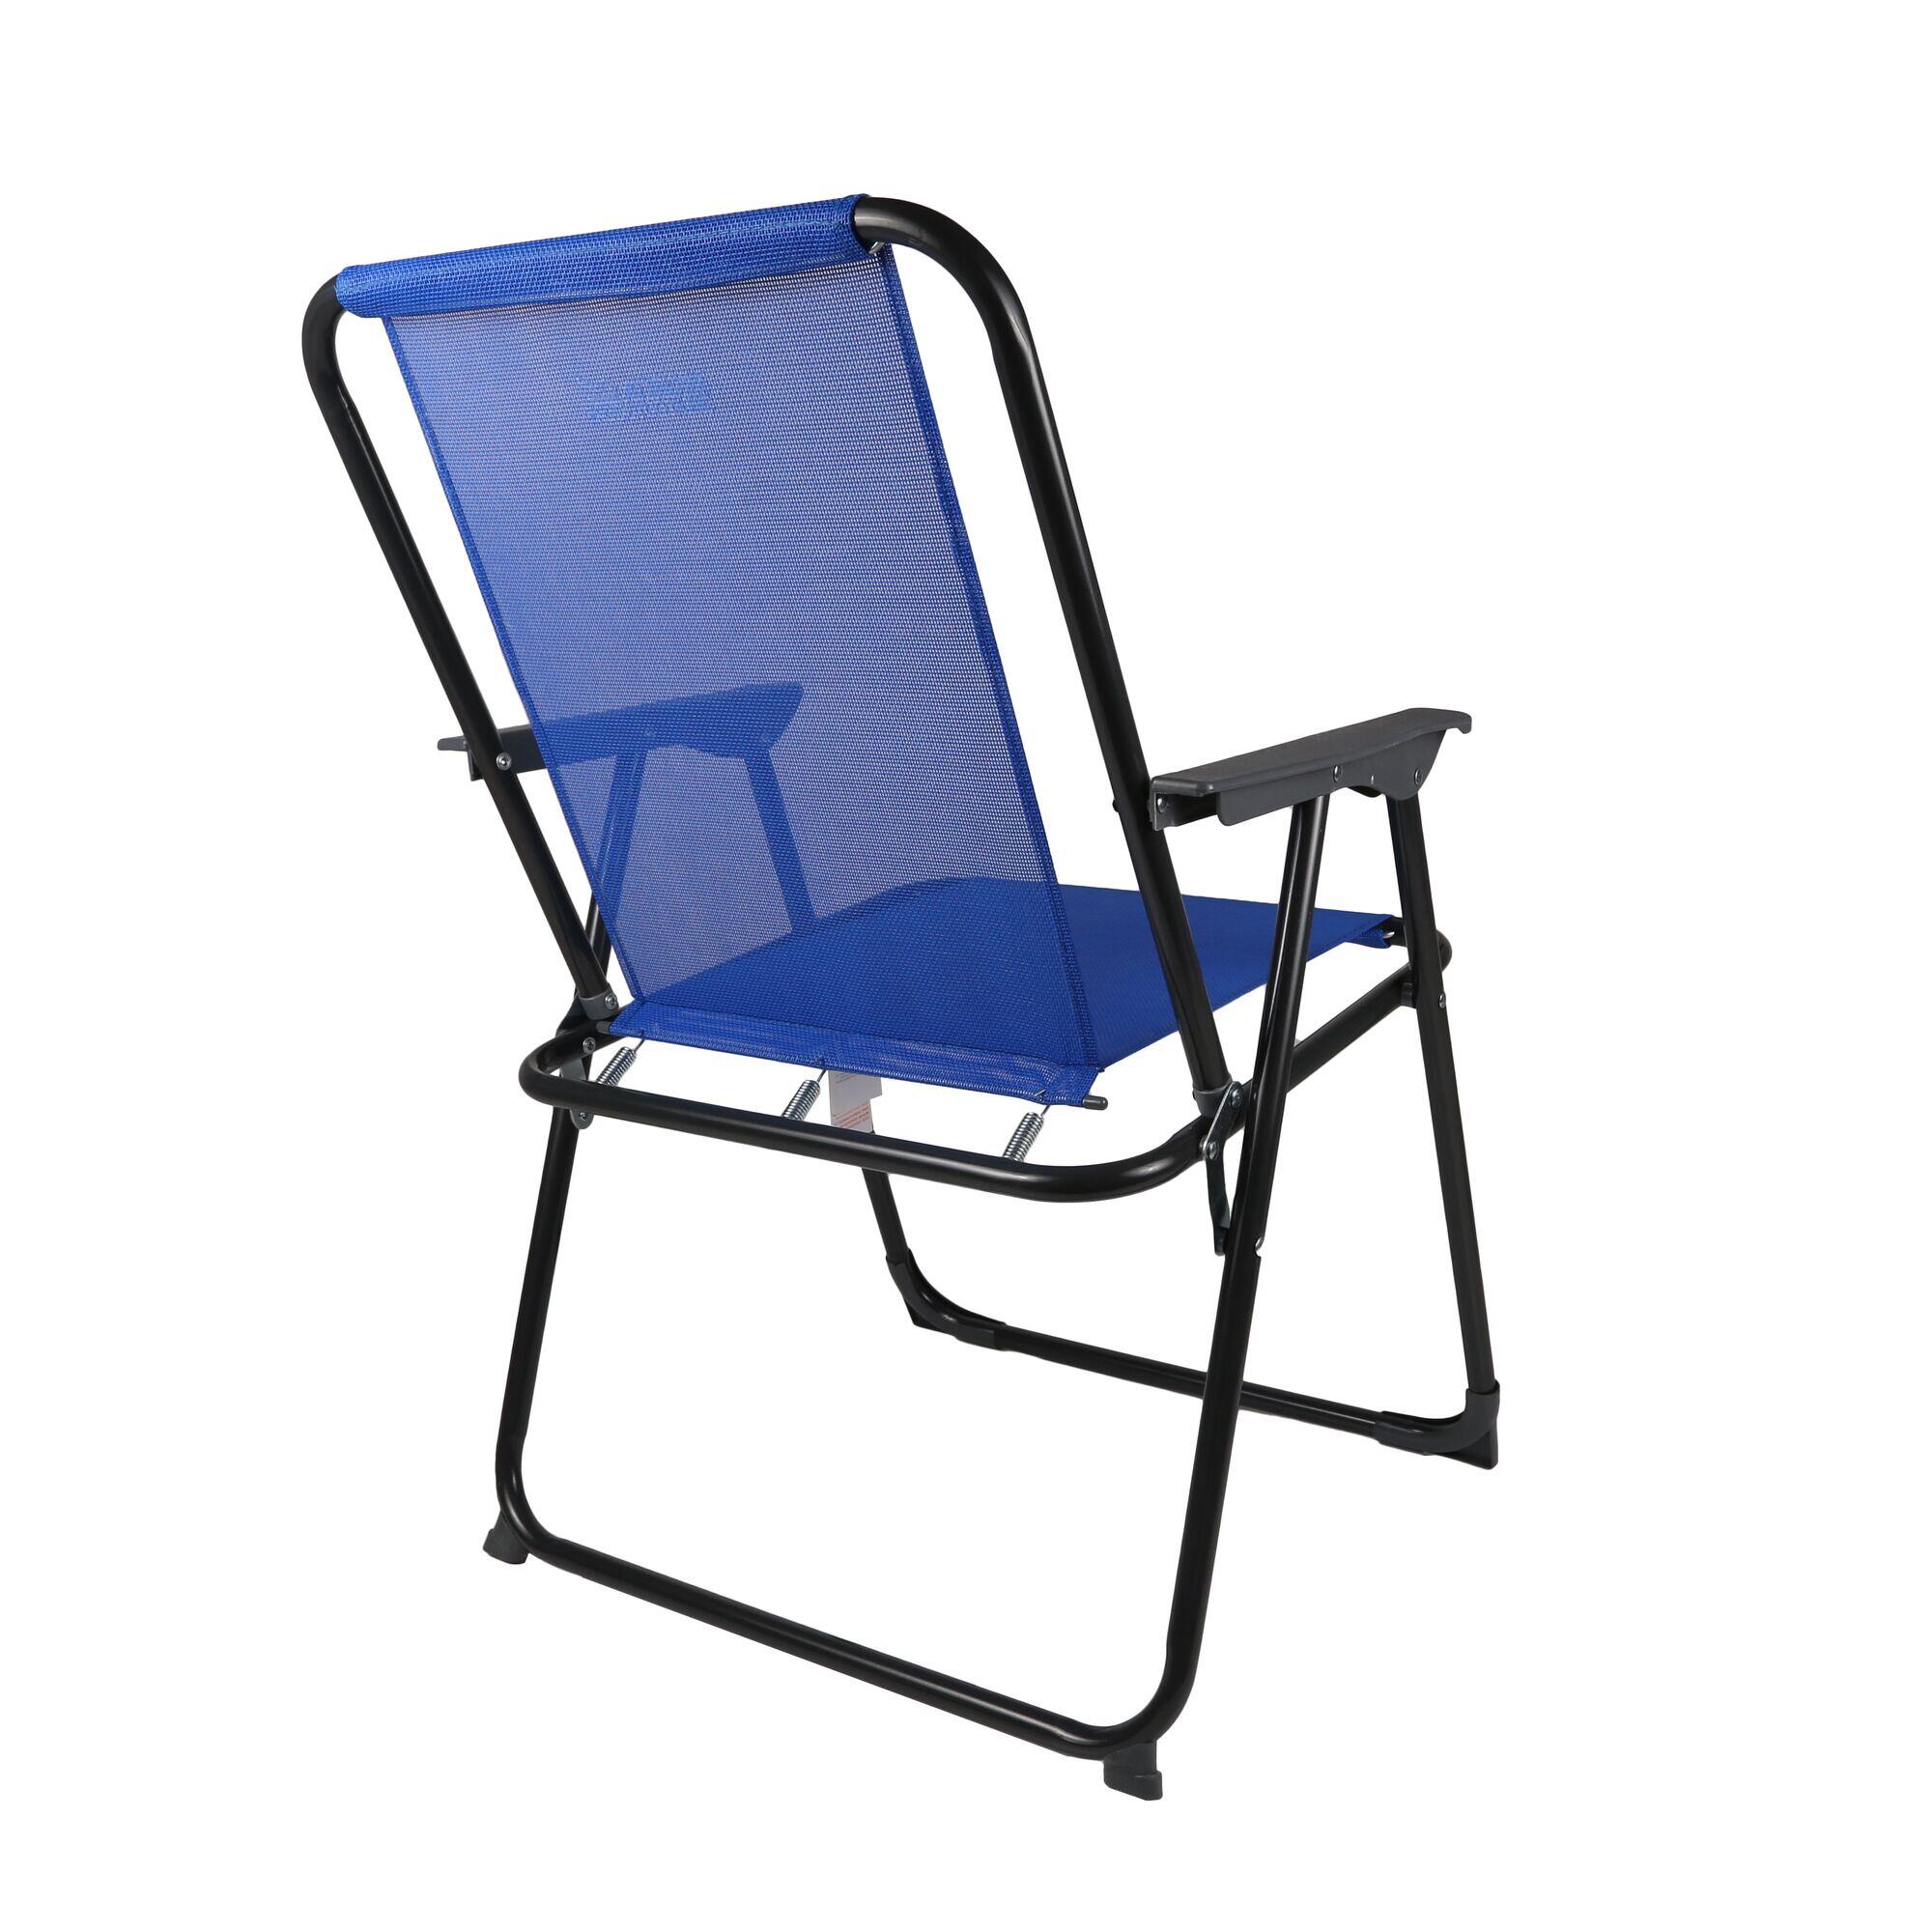 Retexo Adults' Camping Chair - Oxford Blue 2/4